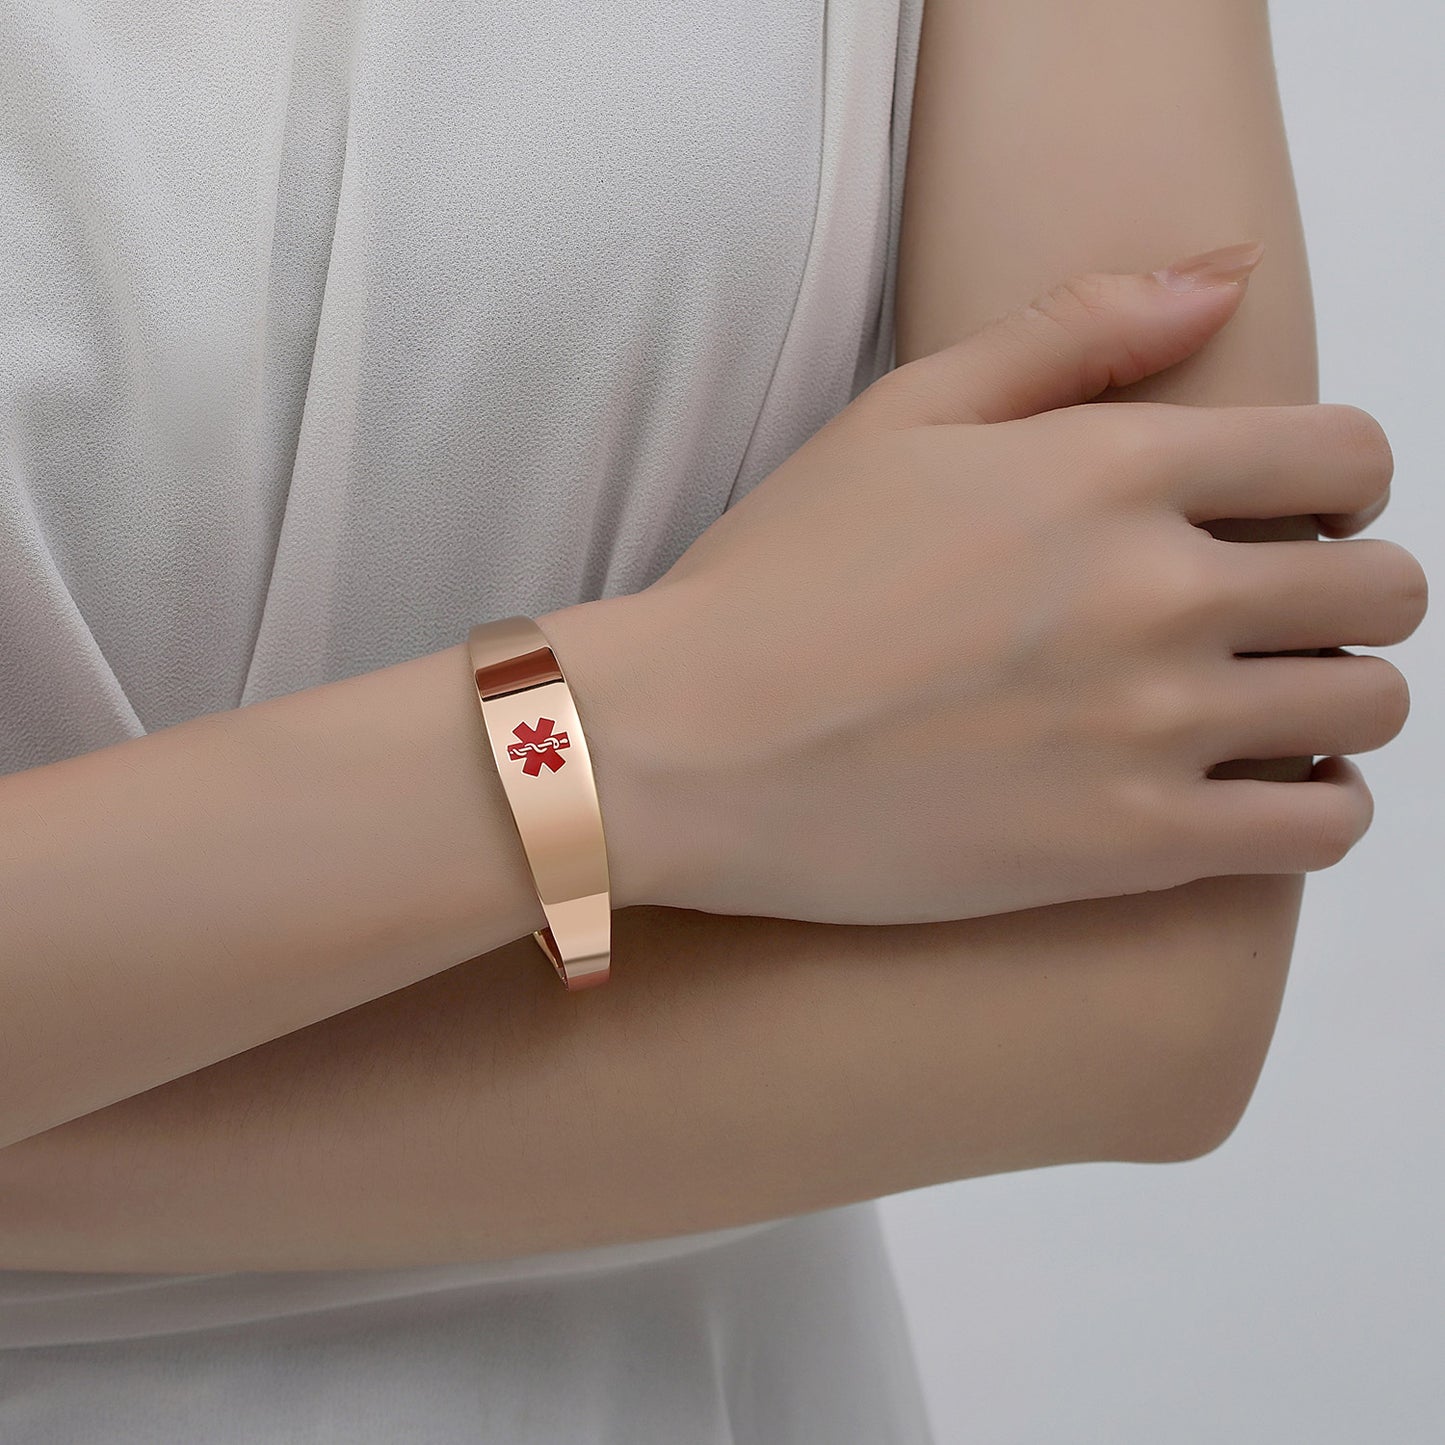 Free Engraving Medical Alert Bracelets Bangle for Women stainless steel cuff medical id bracelets